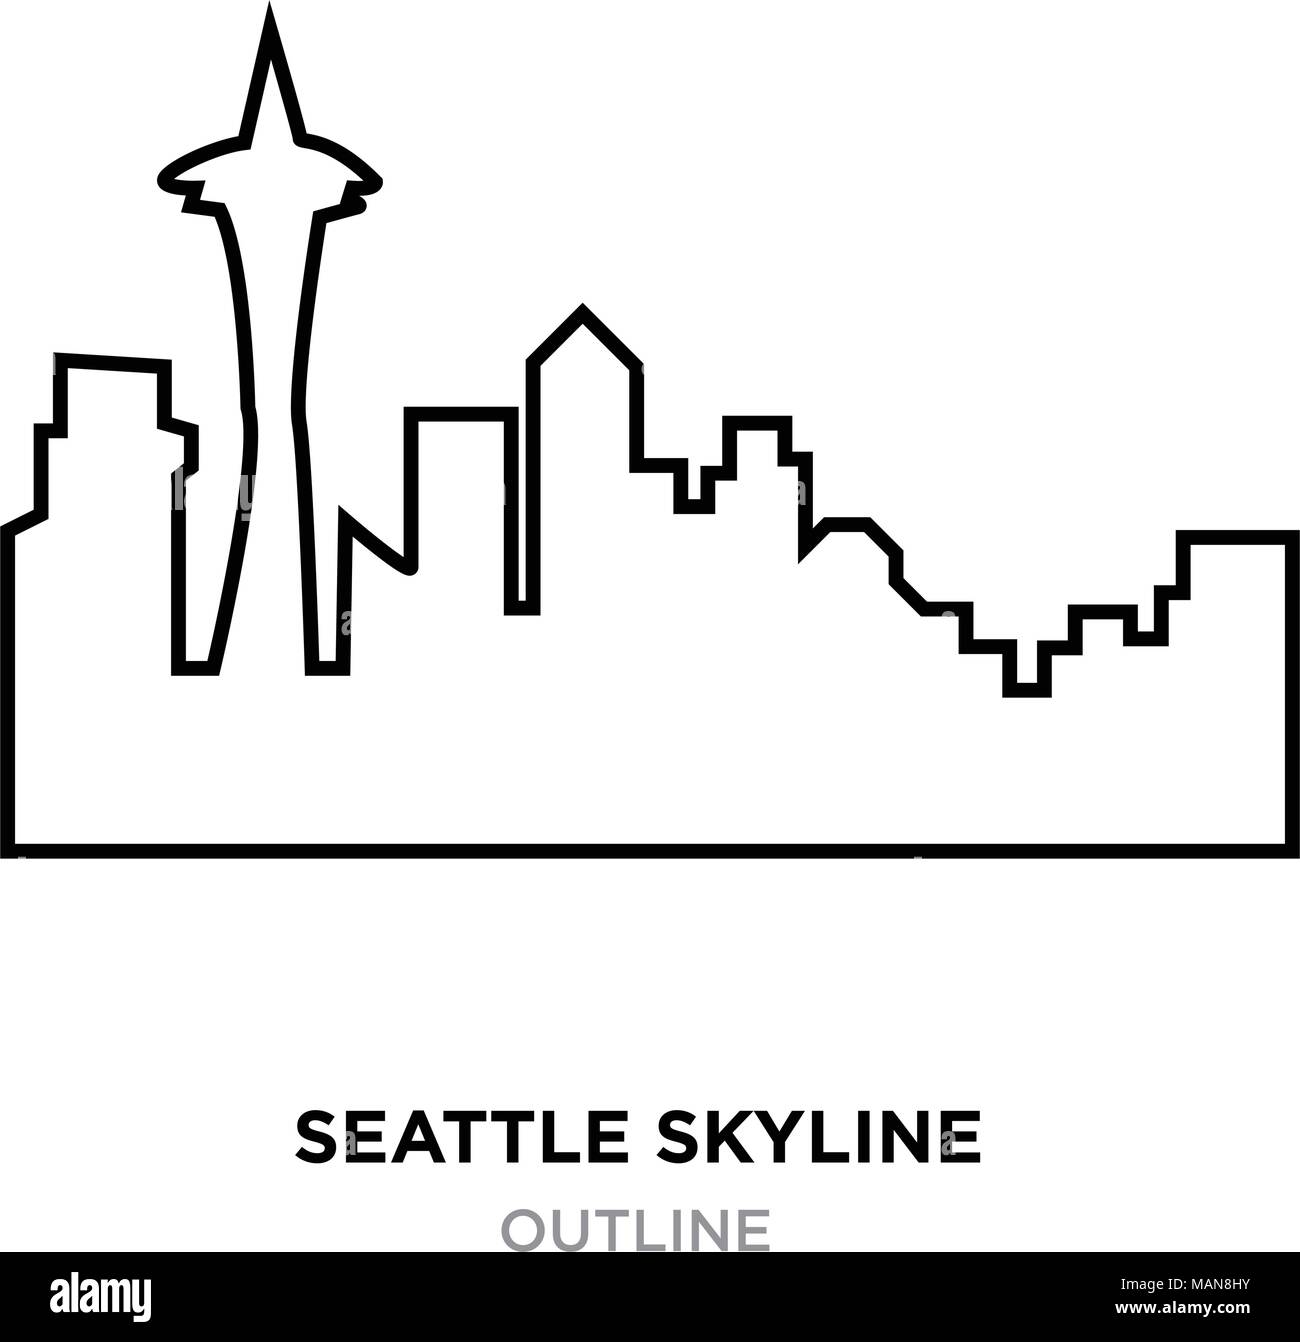 Seattle skyline contorno su sfondo bianco, illustrazione vettoriale Illustrazione Vettoriale